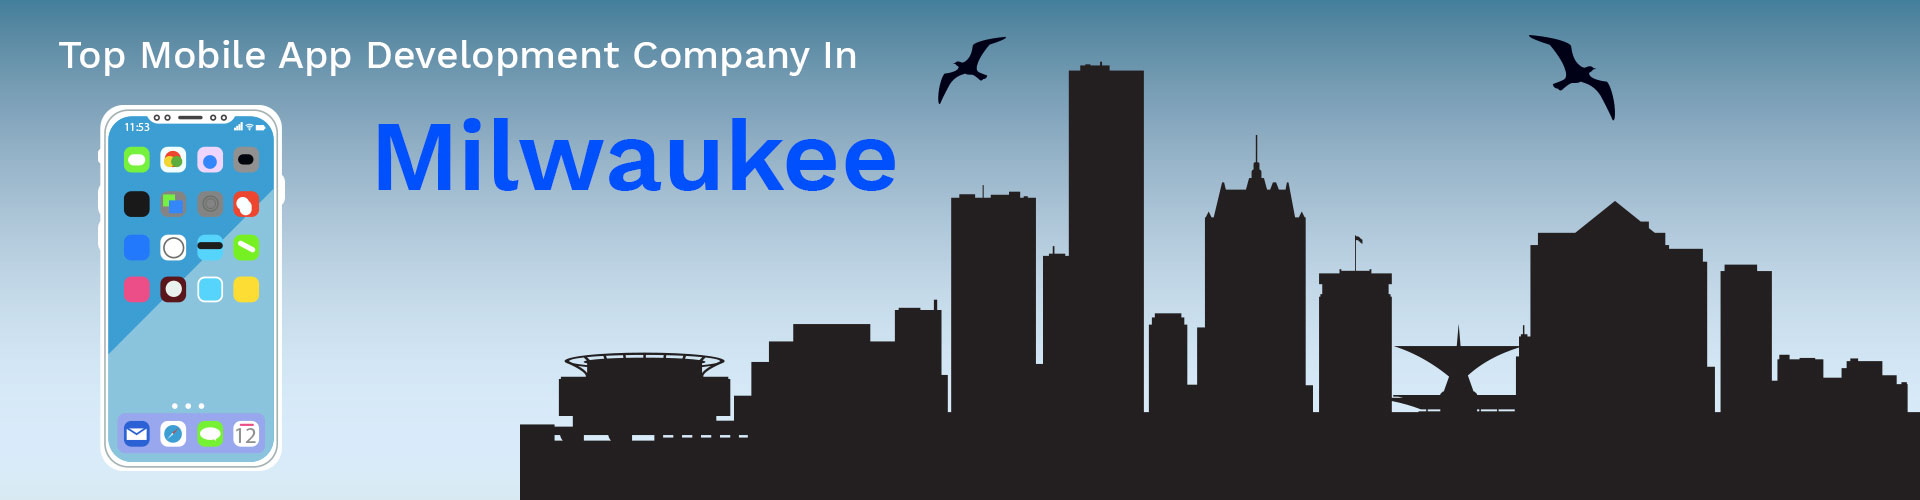 mobile app development company milwaukee